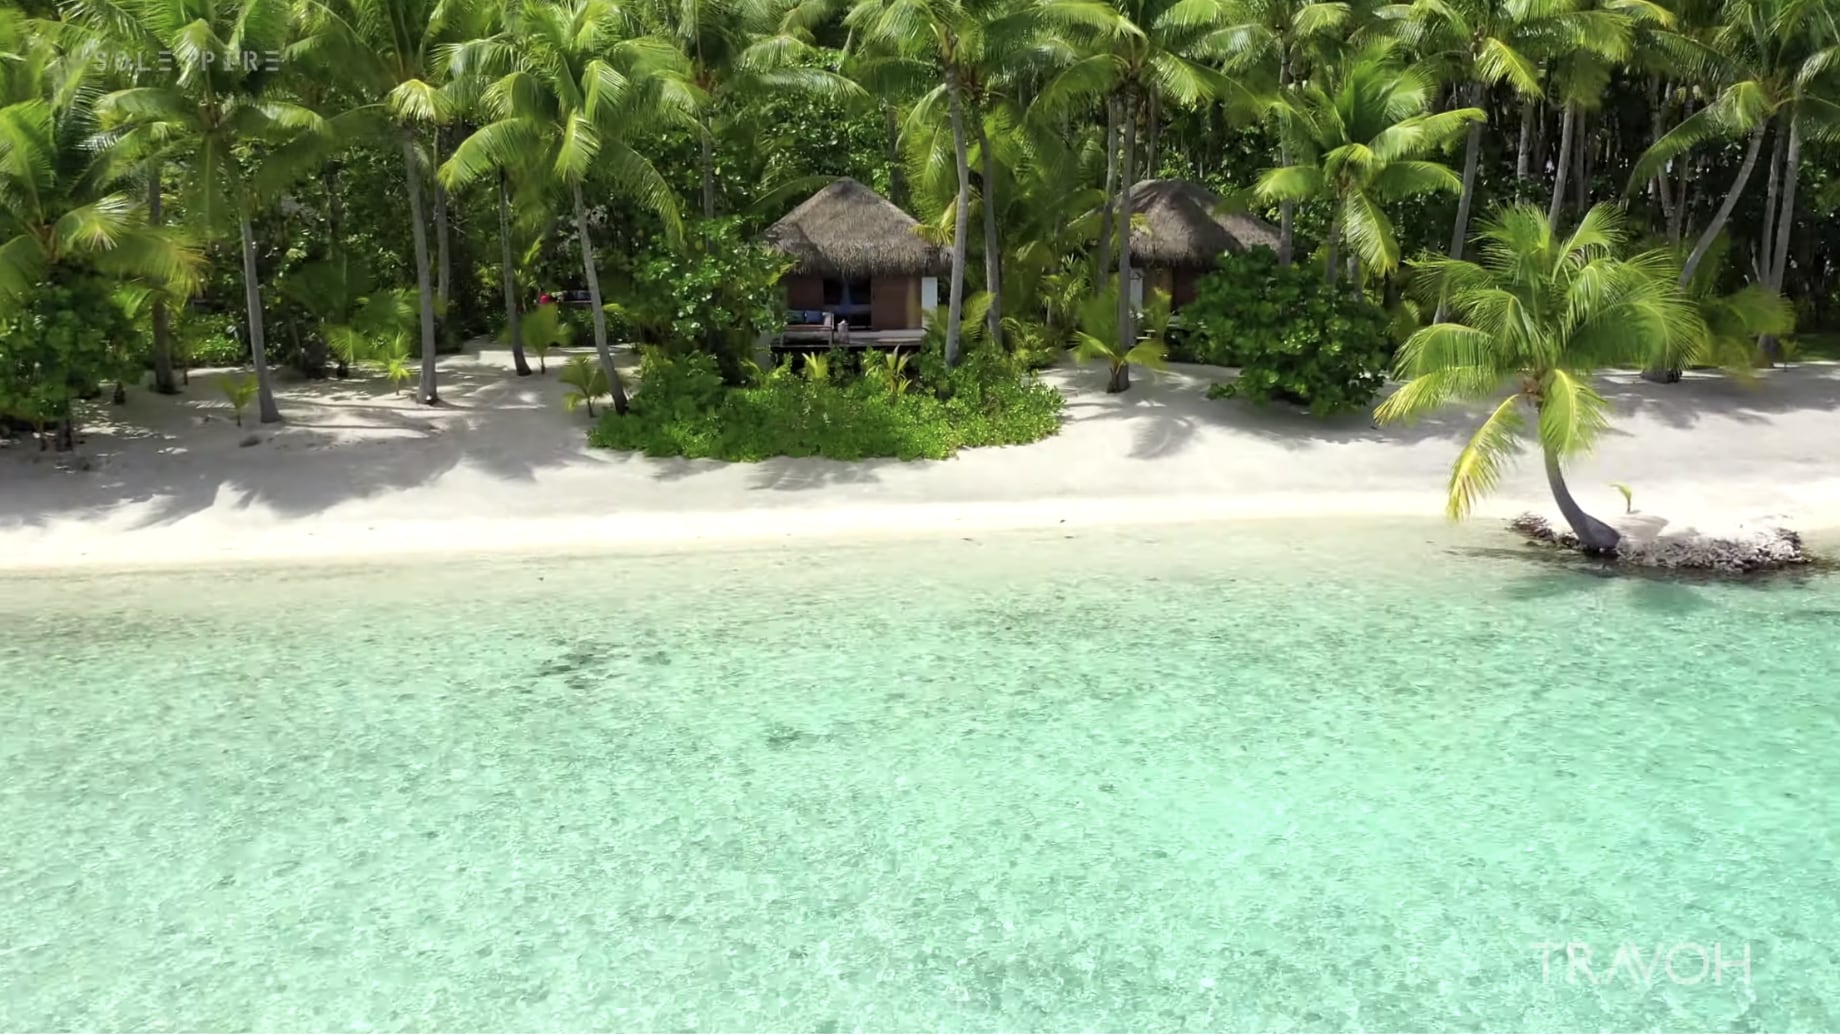 Drone Relax Motivate Inspire Tropical Paradise Beaches in Bora Bora, French Polynesia 🇵🇫 – 4K Travel Video